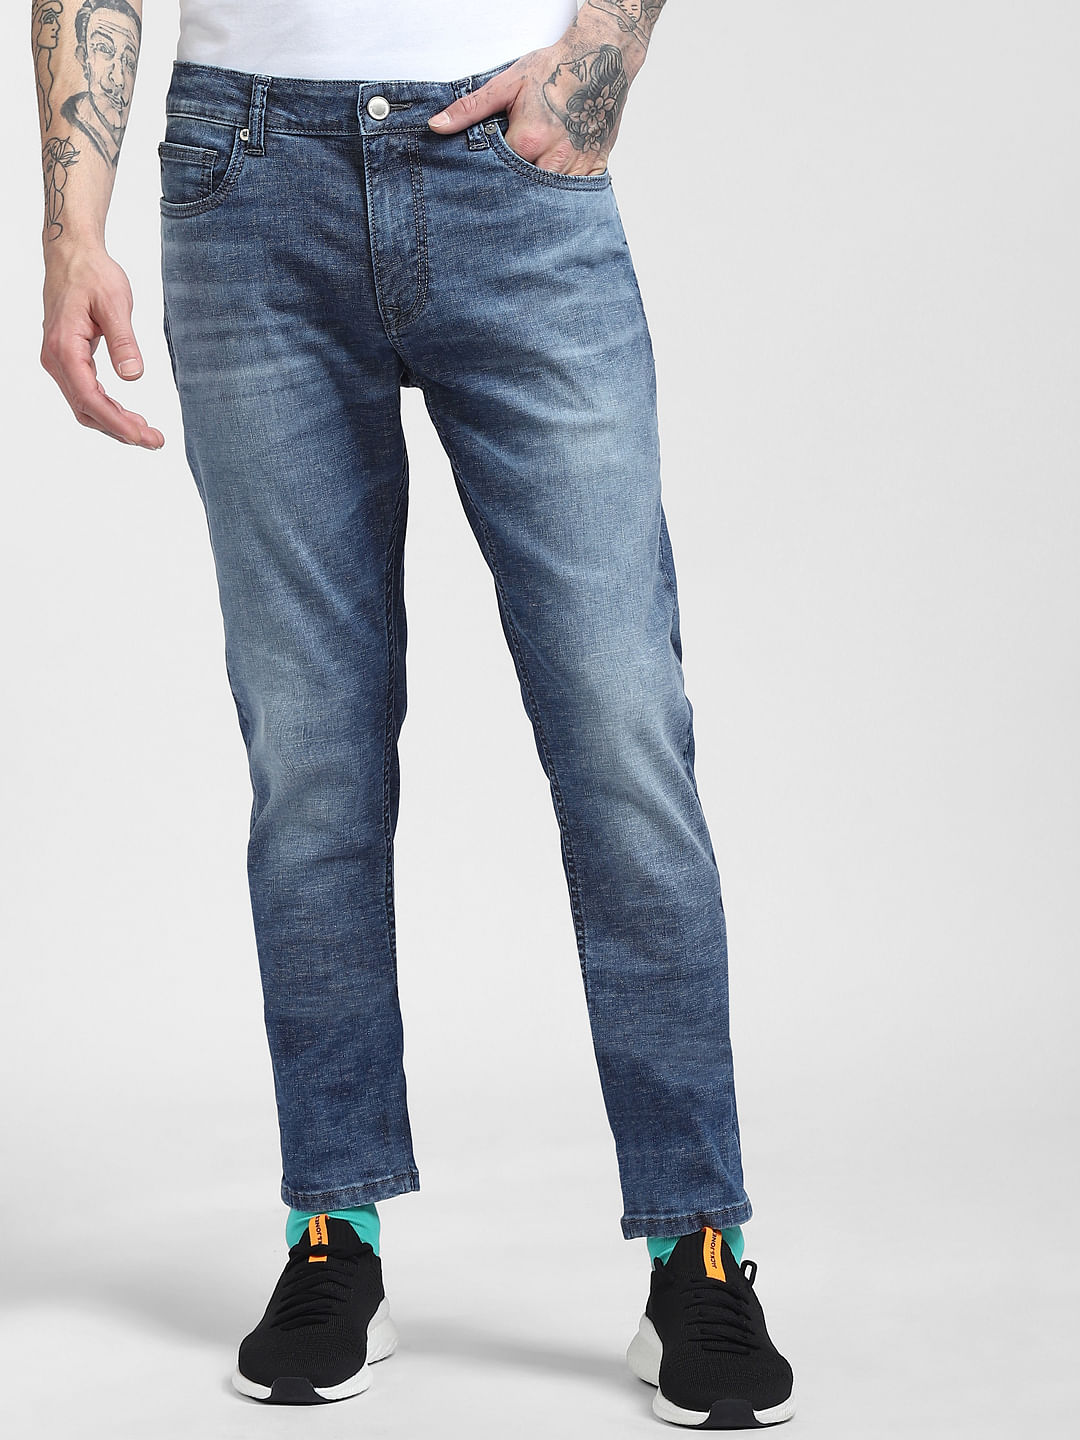 Rabatt 58 % HERREN Jeans Ripped Jack & Jones Straight jeans Blau 